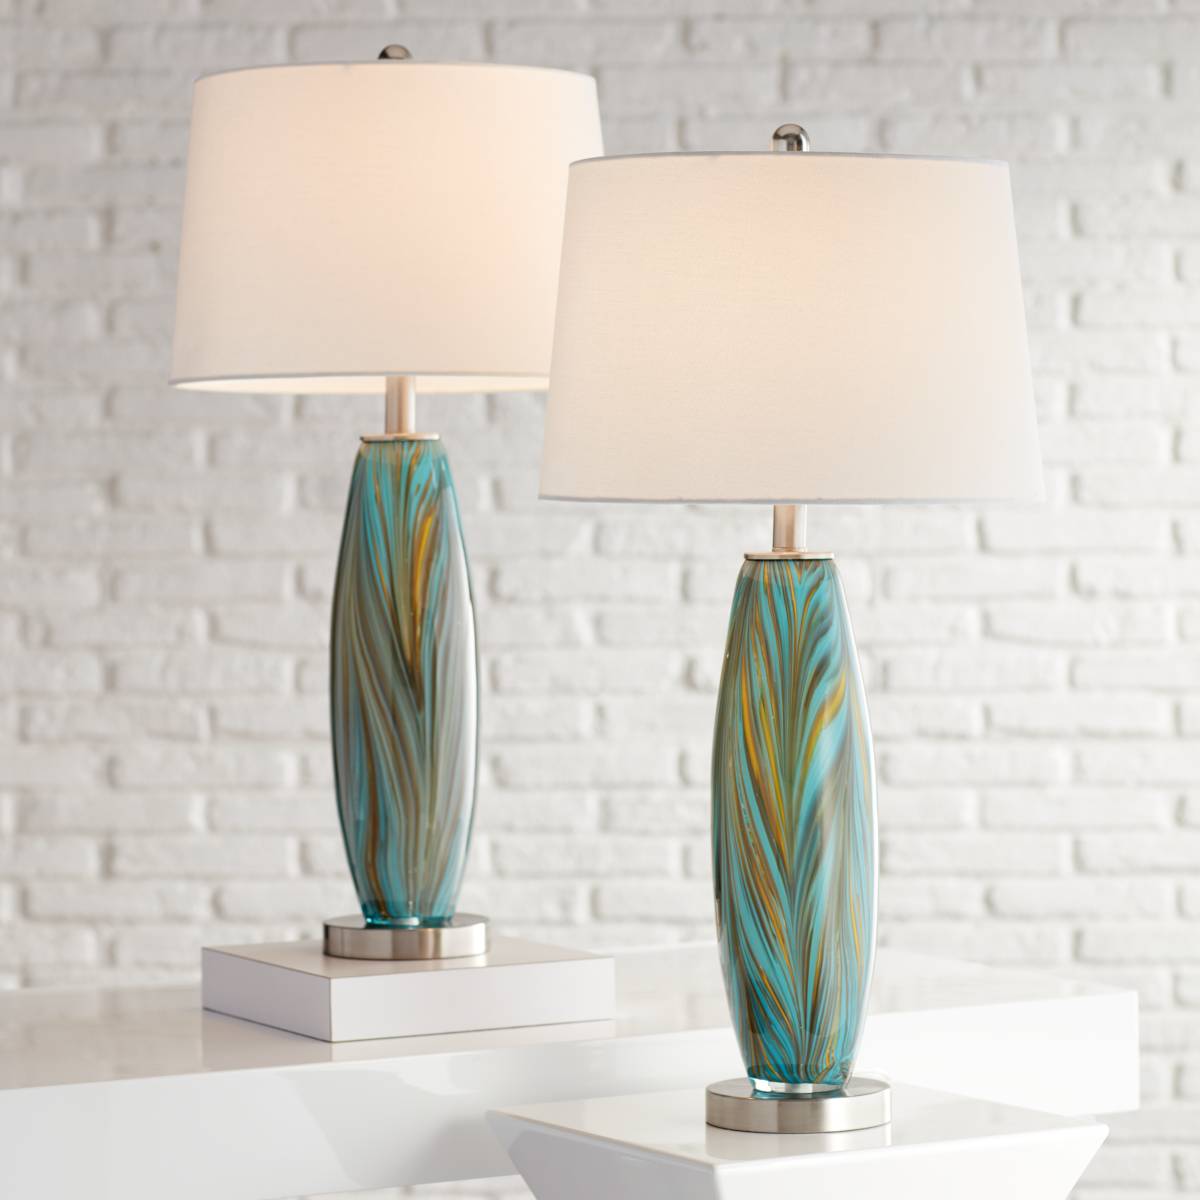 Blue Table Lamps Plus, Courtney Ceramic Table Lamp Seafoam